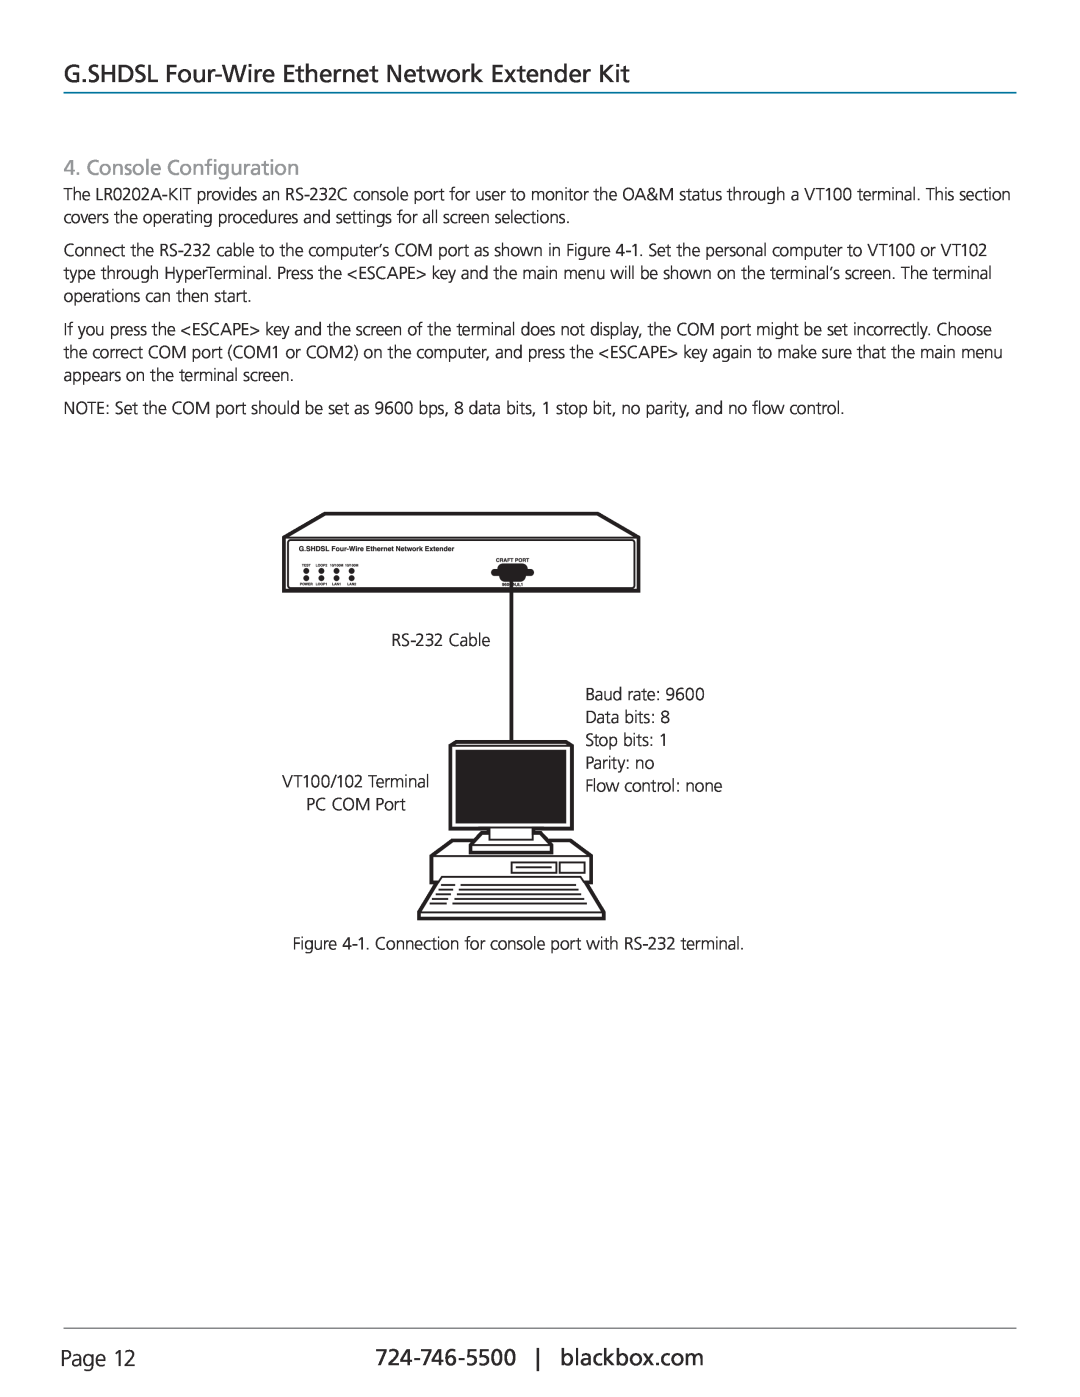 Black Box LR0202A-KIT manual G.SHDSL Four-Wire Ethernet Network Extender Kit, Page, Console Configuration 